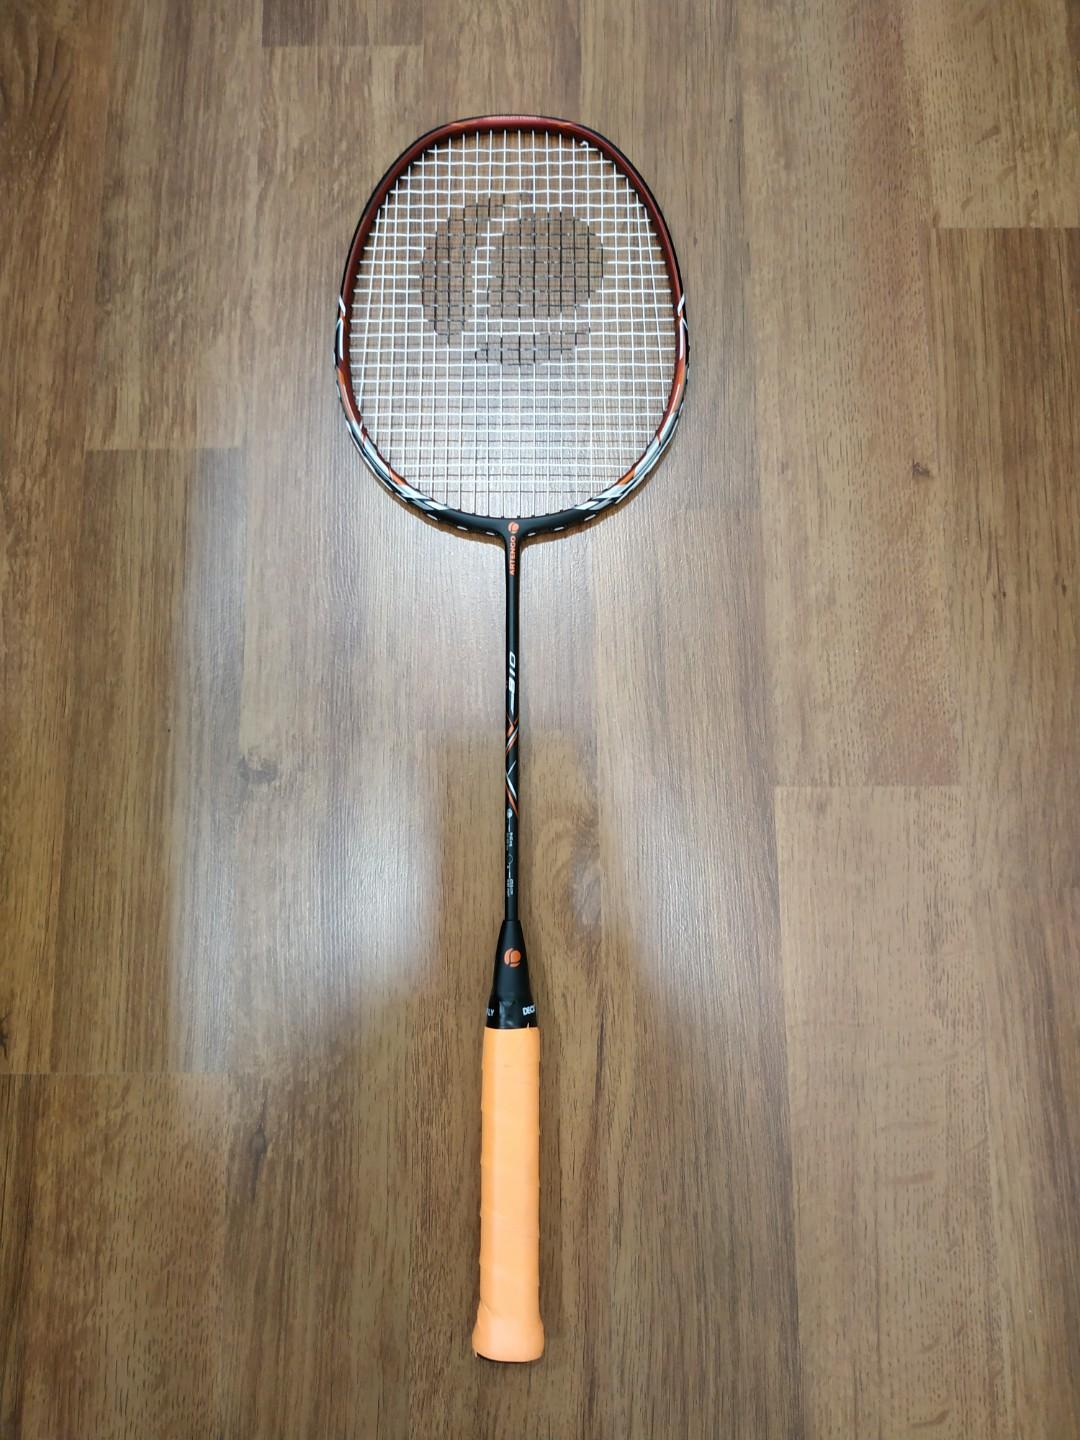 artengo badminton racket 810